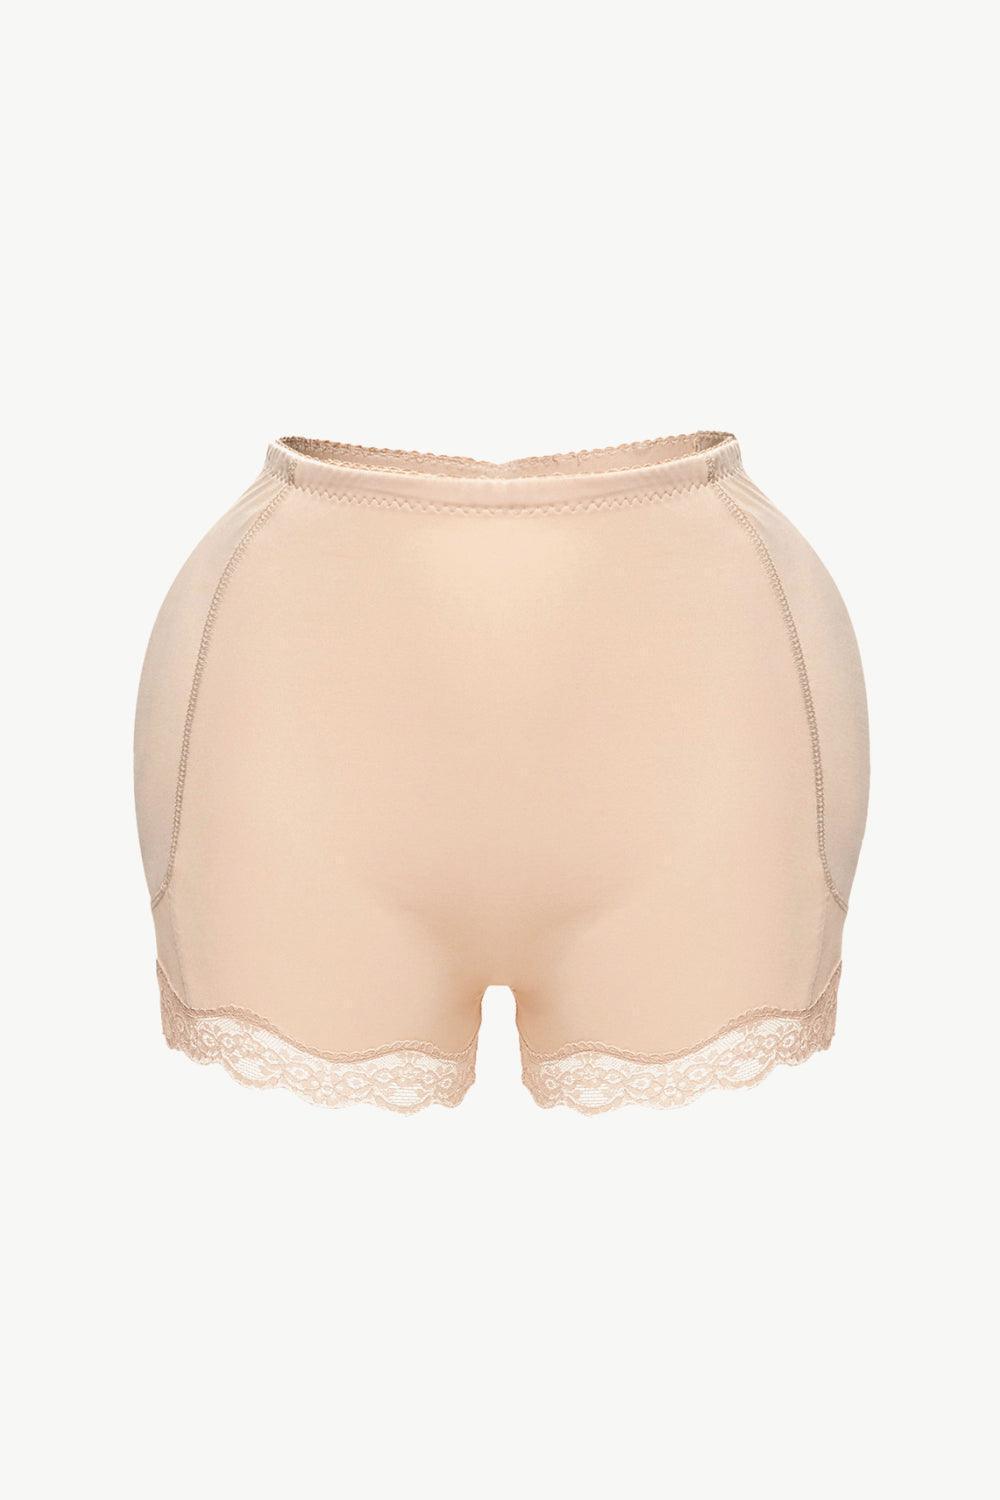 Lace Trim Butt Lifter Shaping Shorts - MXSTUDIO.COM